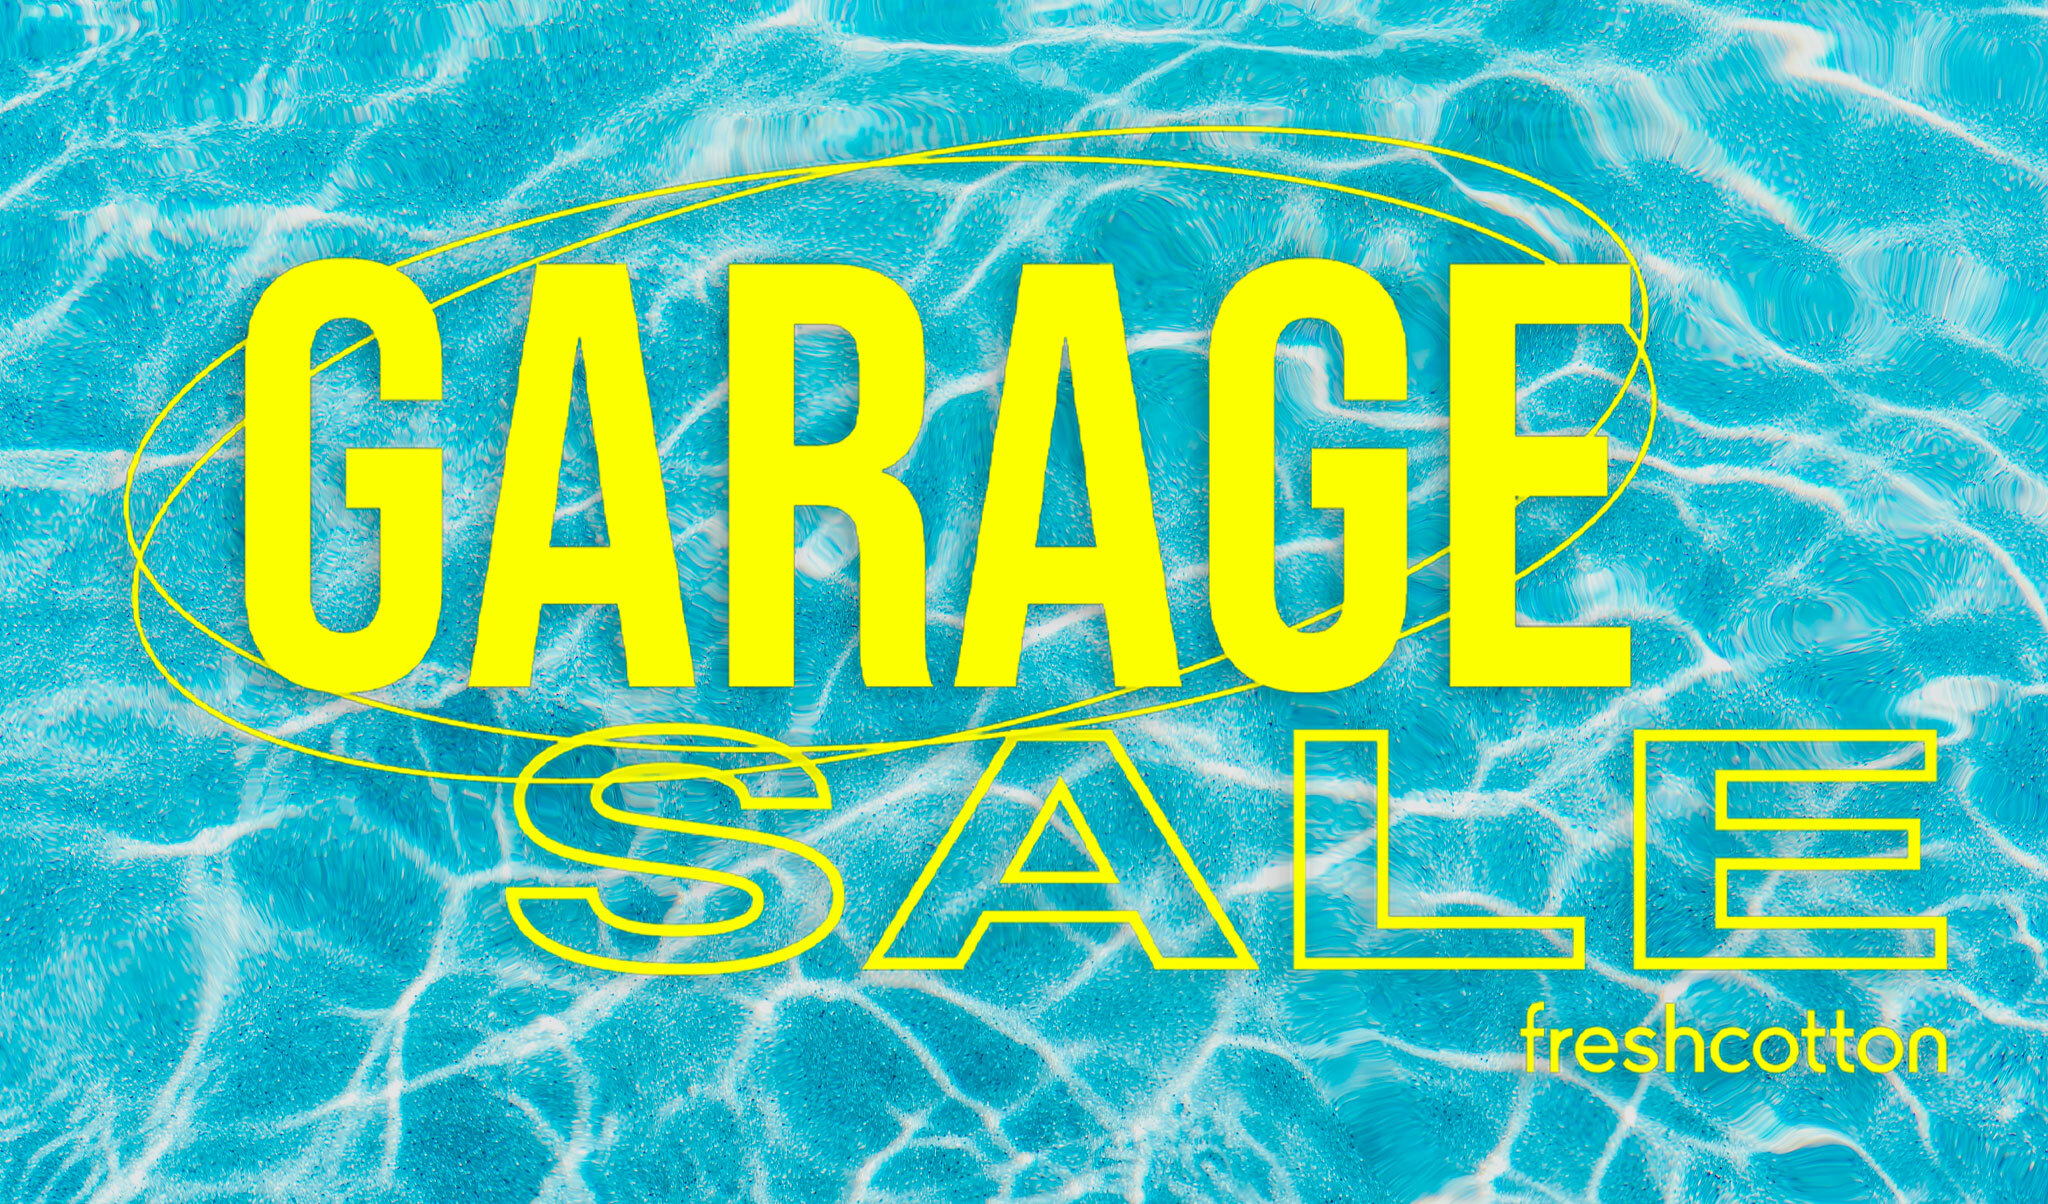 Garage sale time!